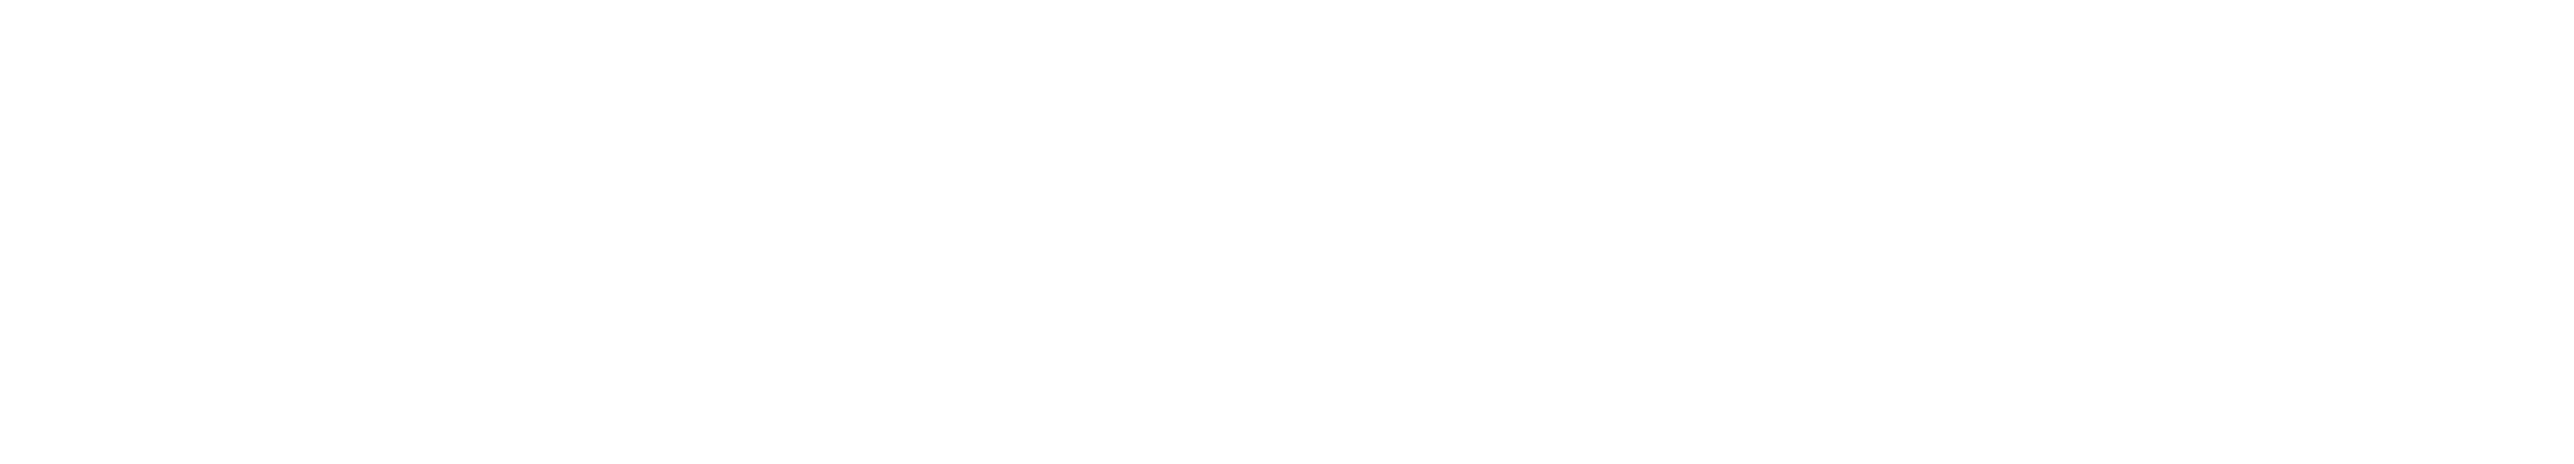 Station16Apts_logo_white